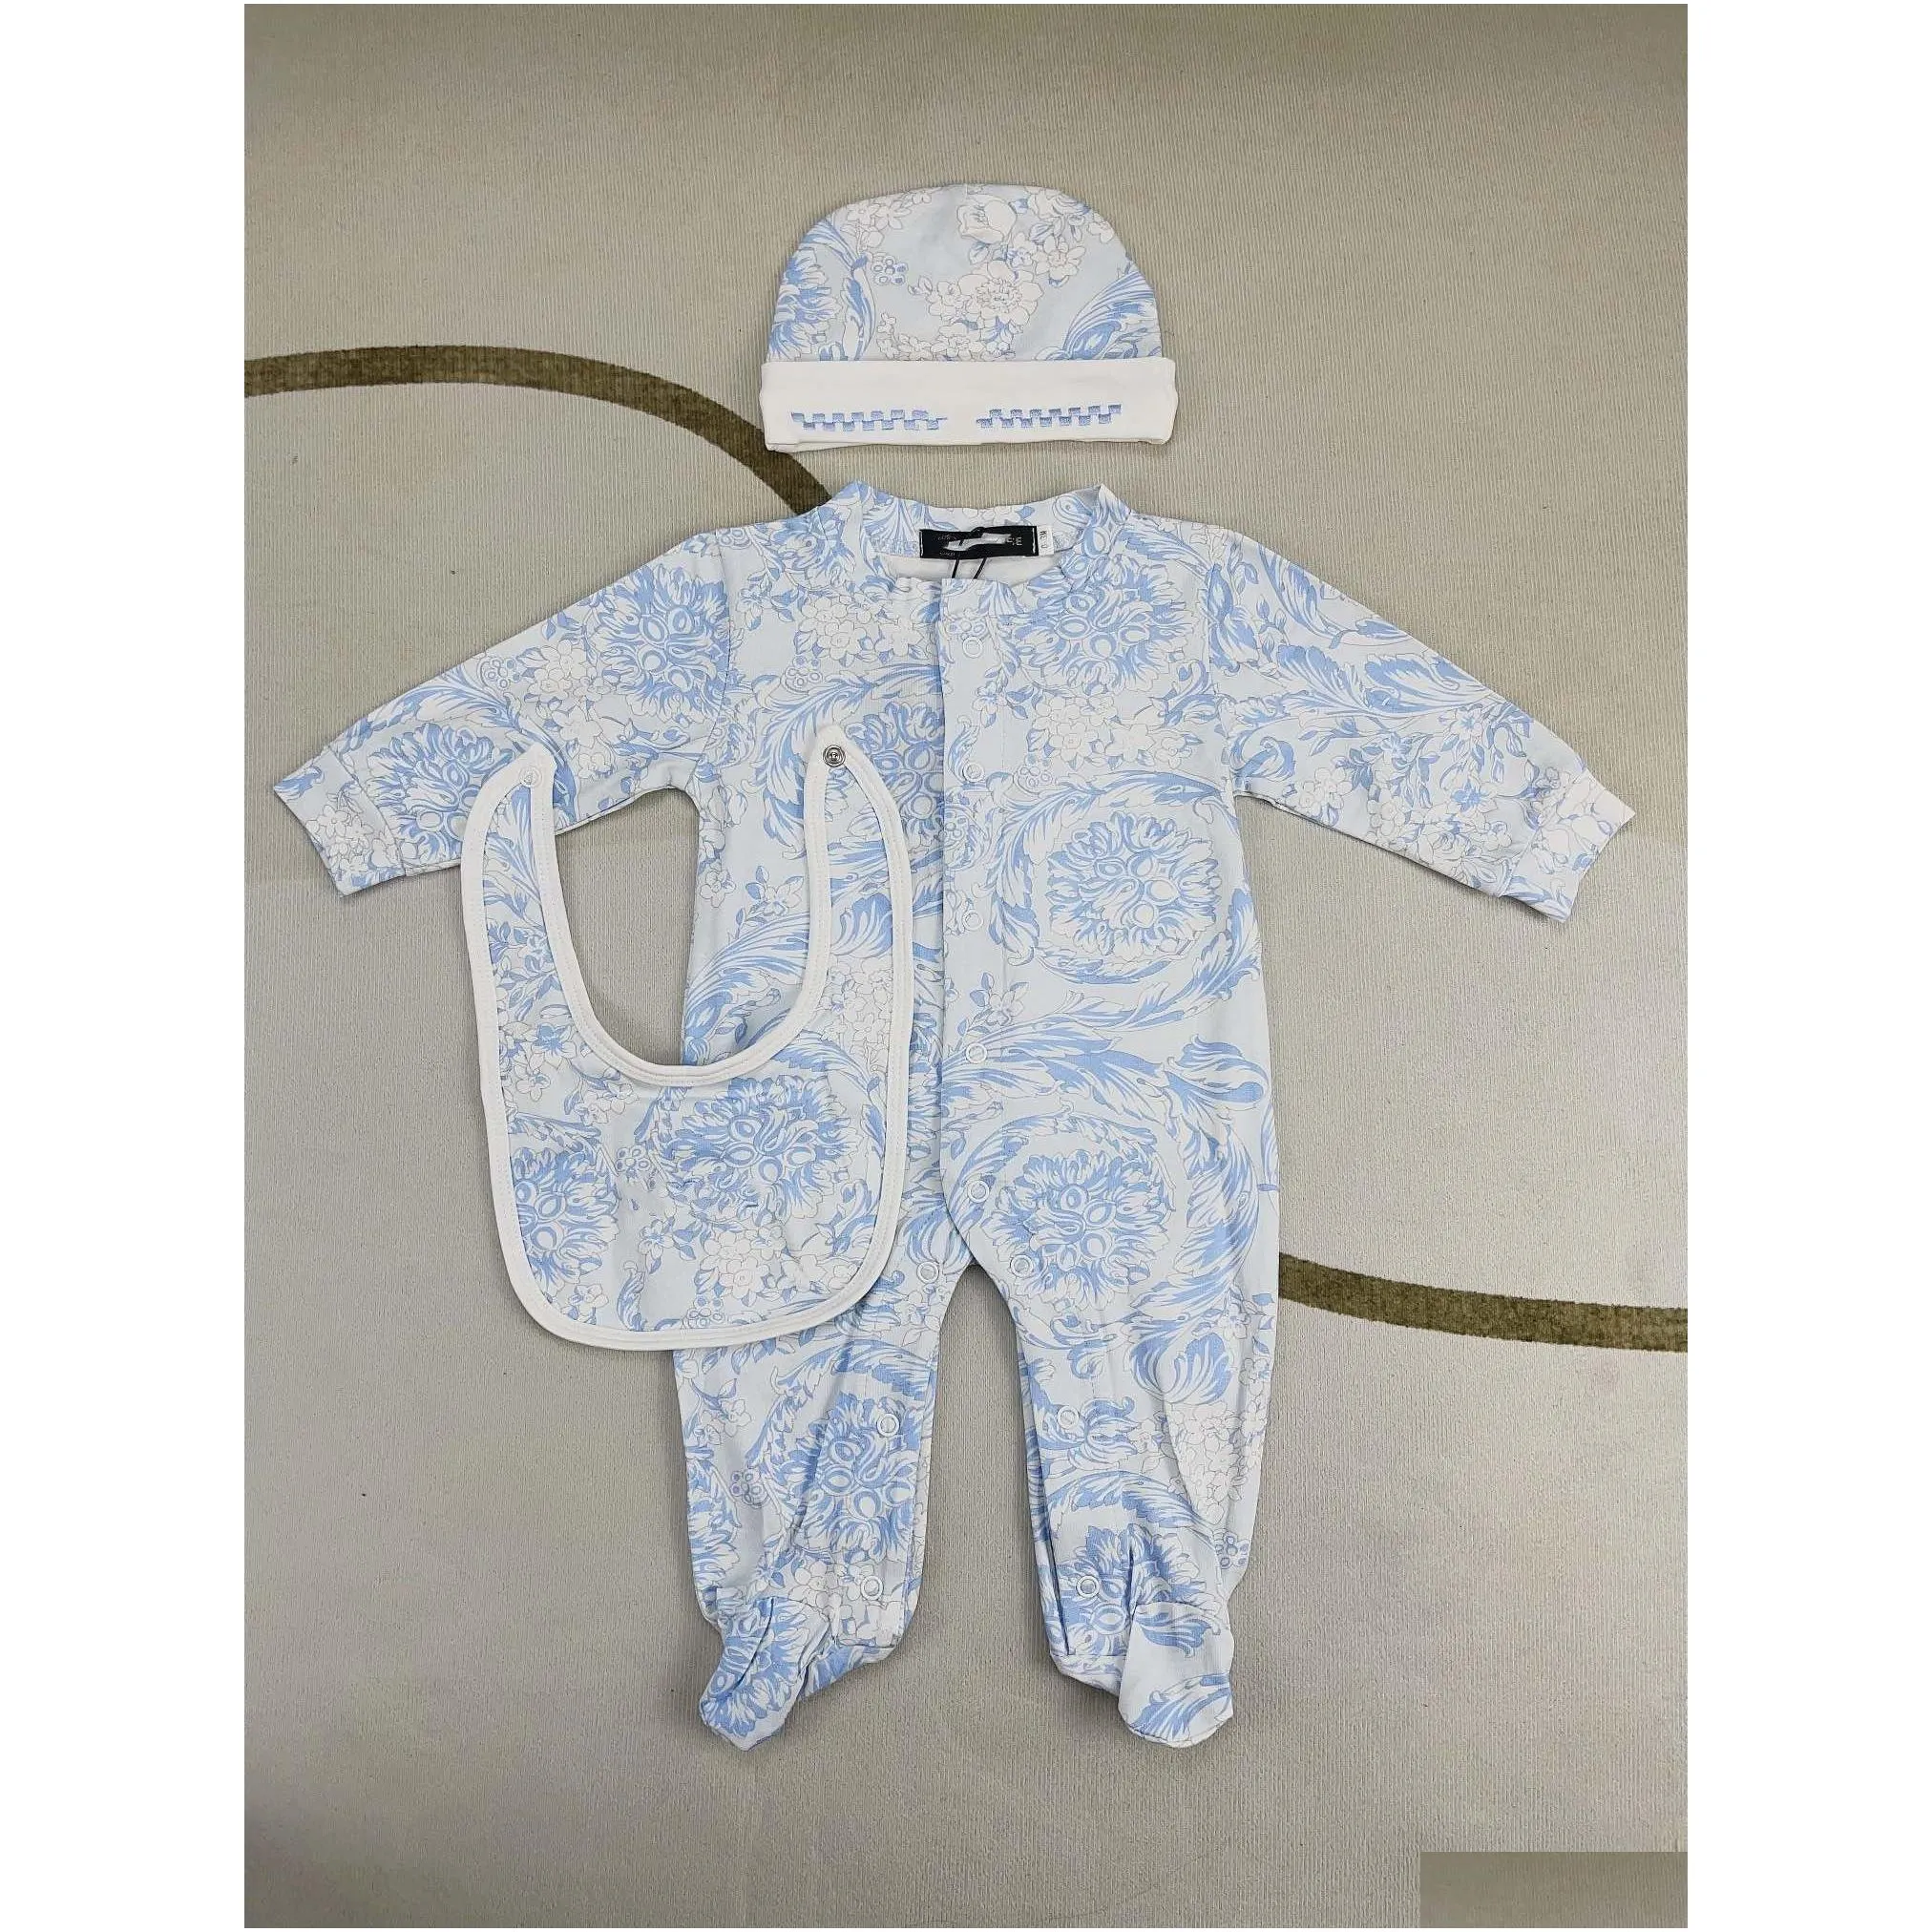 Fashion Infant kids romper designer Newborn baby girls star moon printed long sleeve jumpsuits with hat bibs 3pcs babies 1st climb clothes